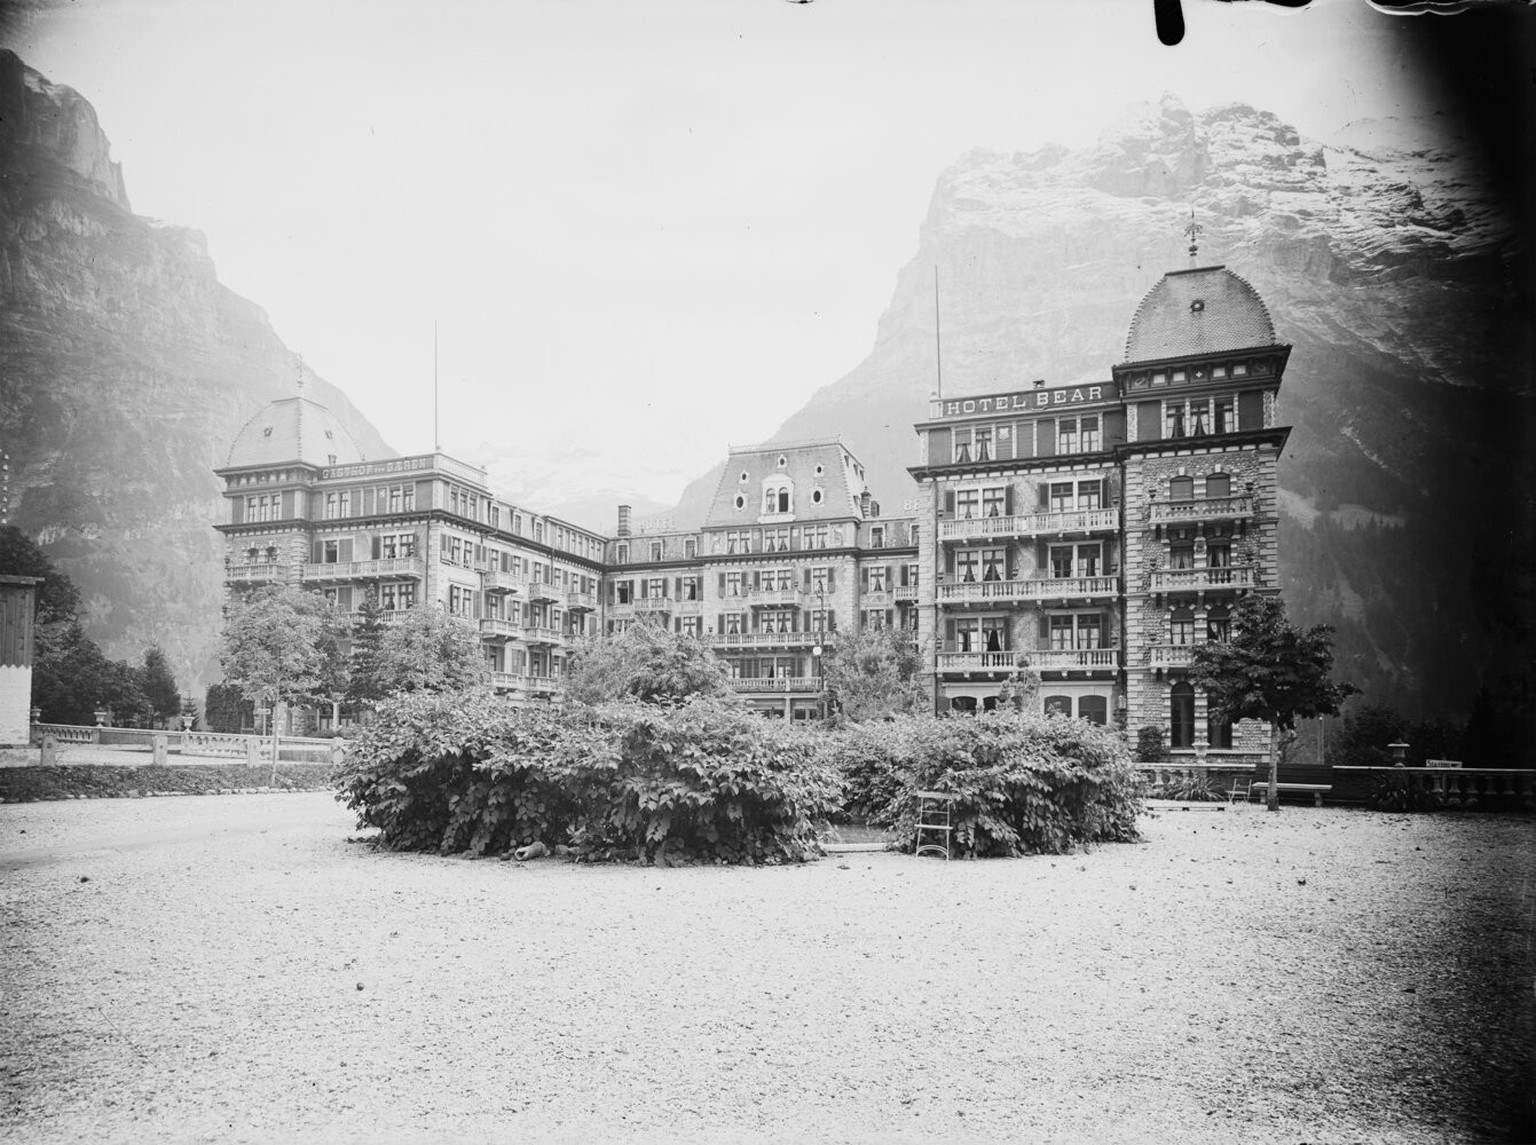 Das 1893 erbaute Grandhotel Bär in Grindelwald.